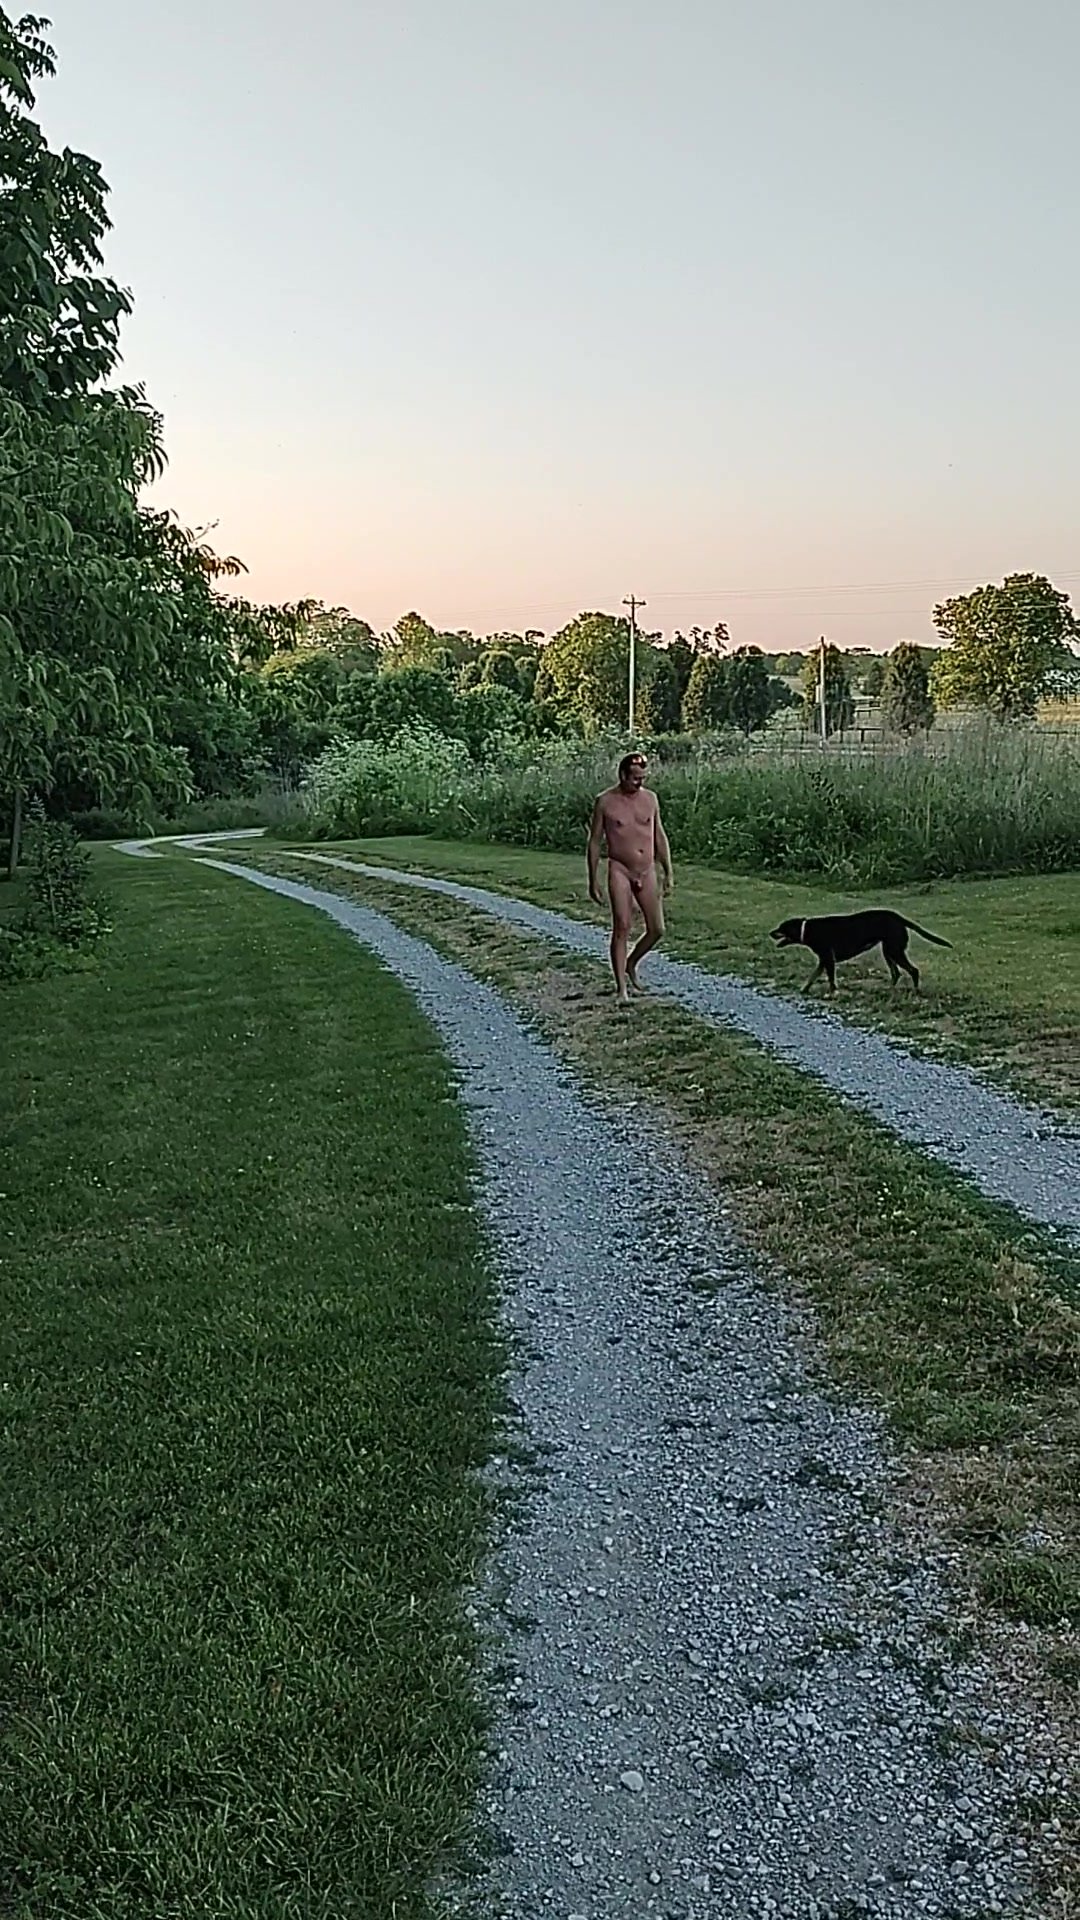 Nudist man walking